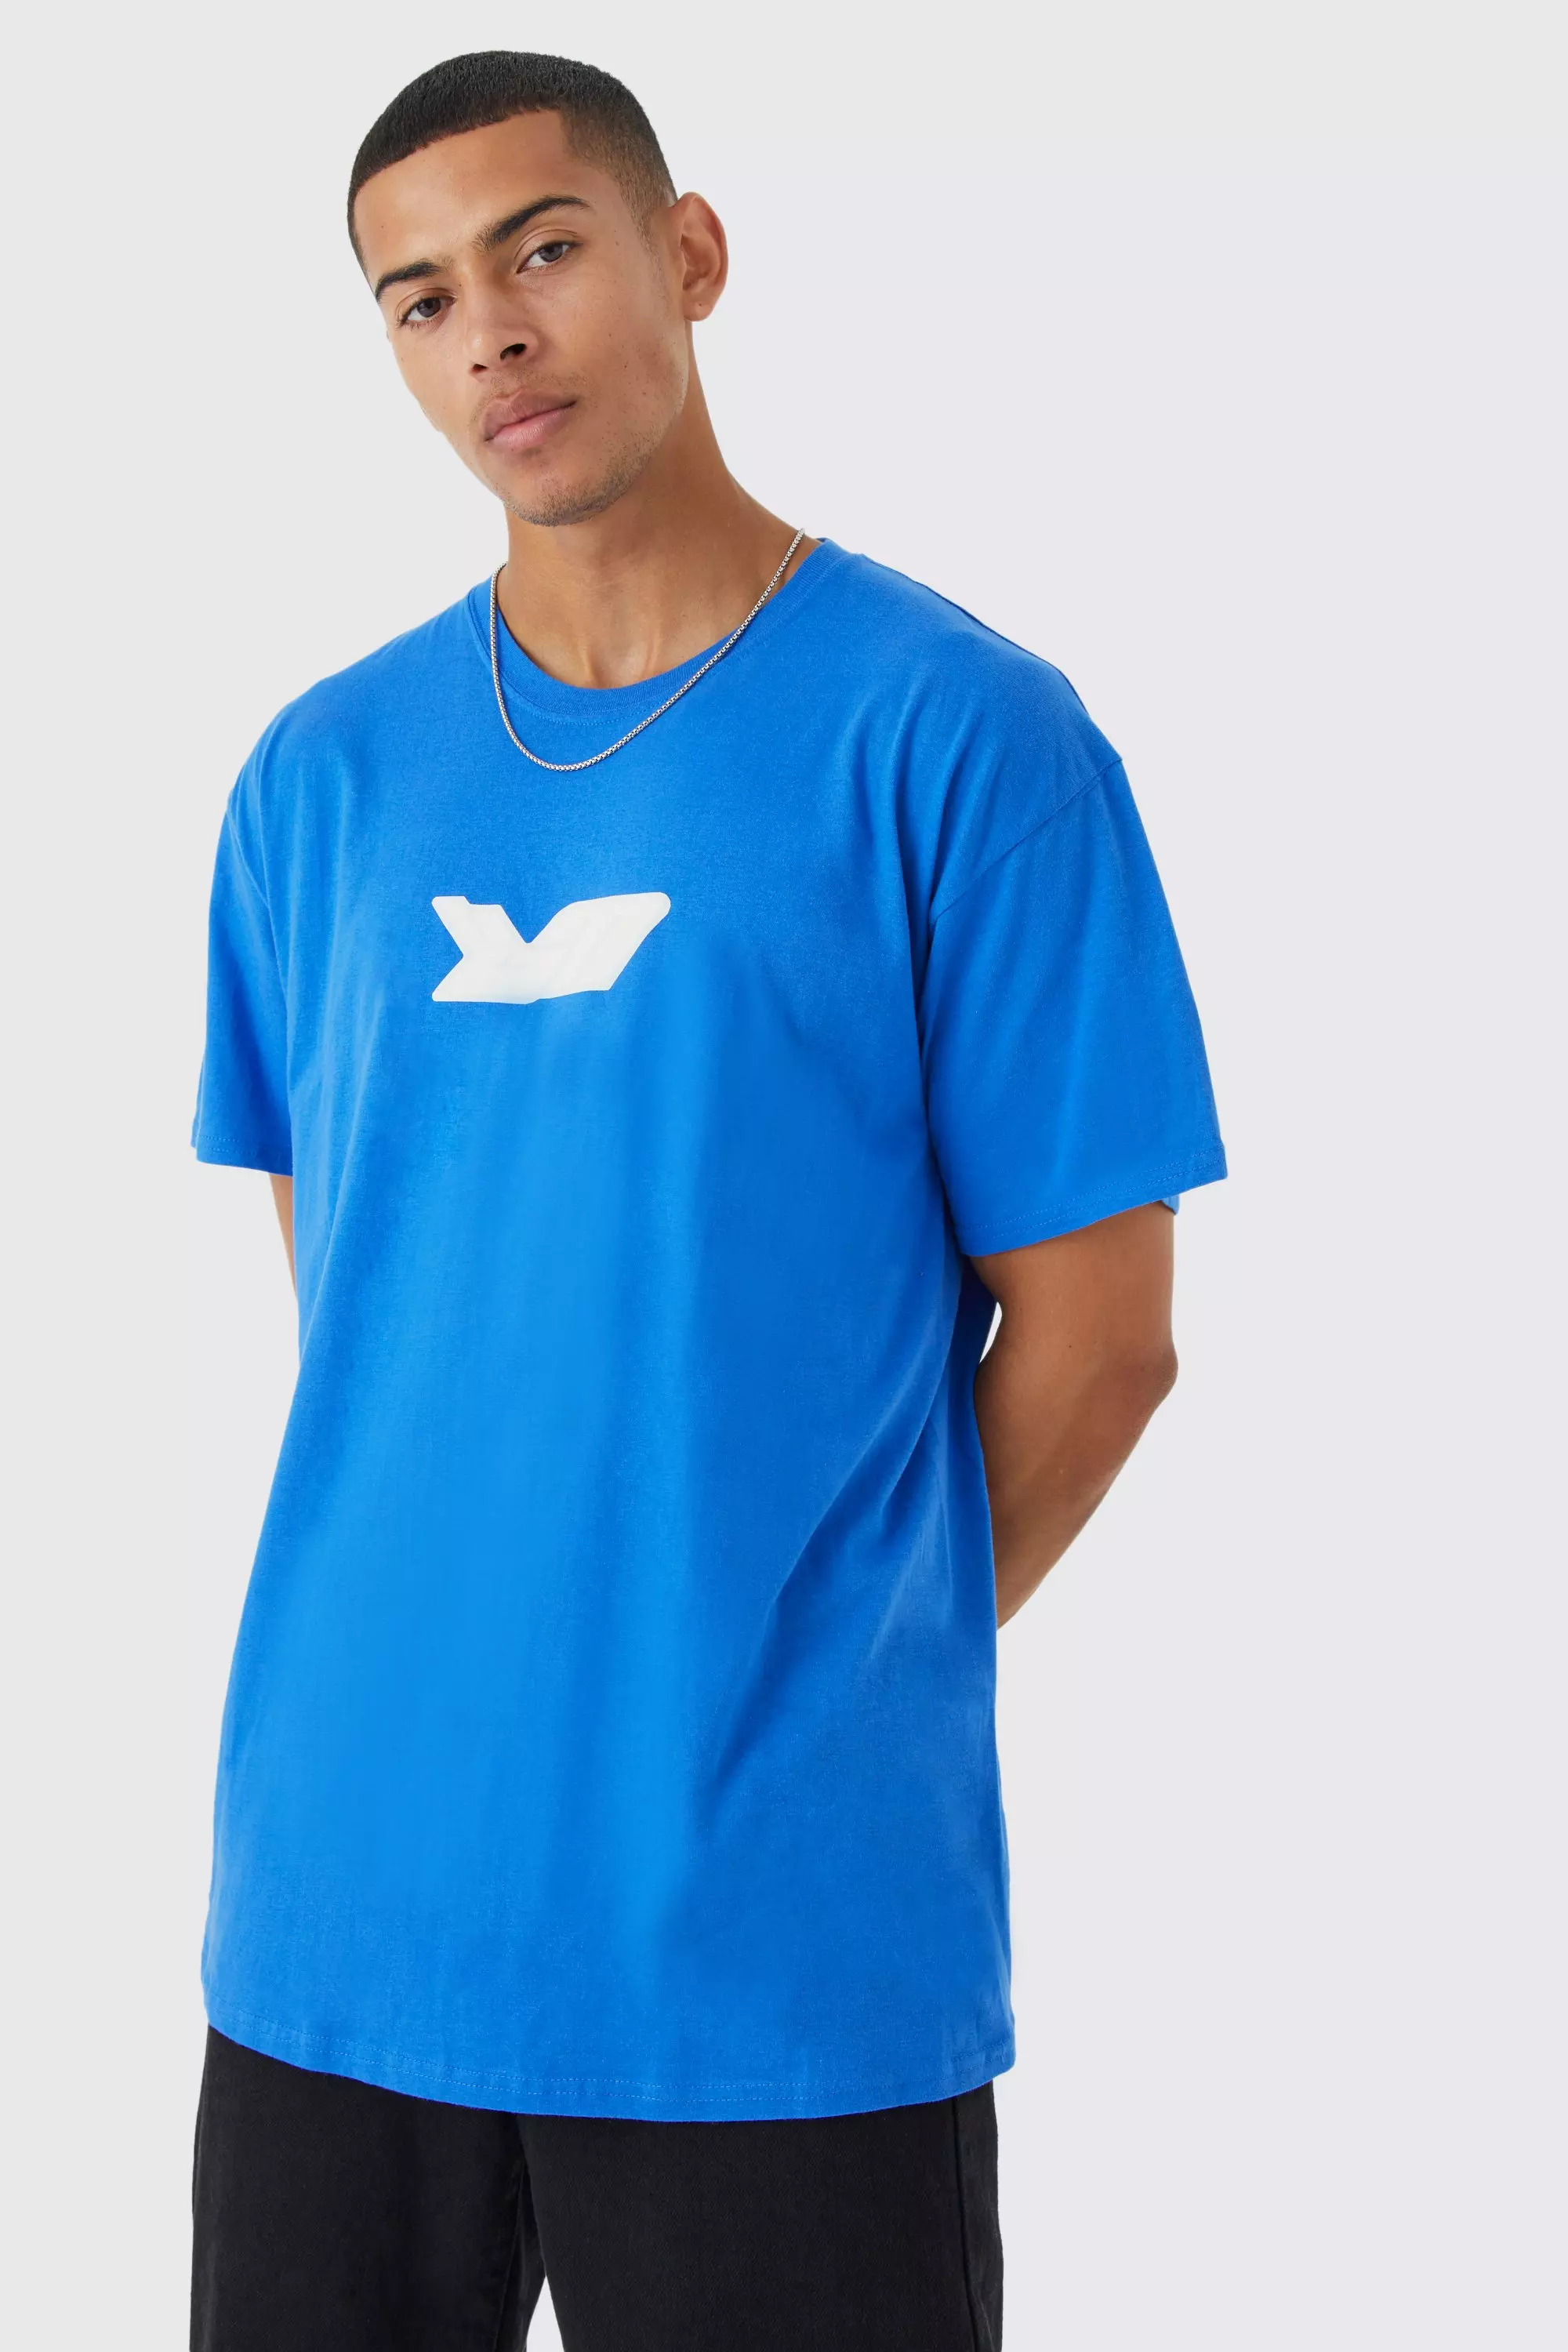 Oversized Bm Graphic T-shirt Cobalt